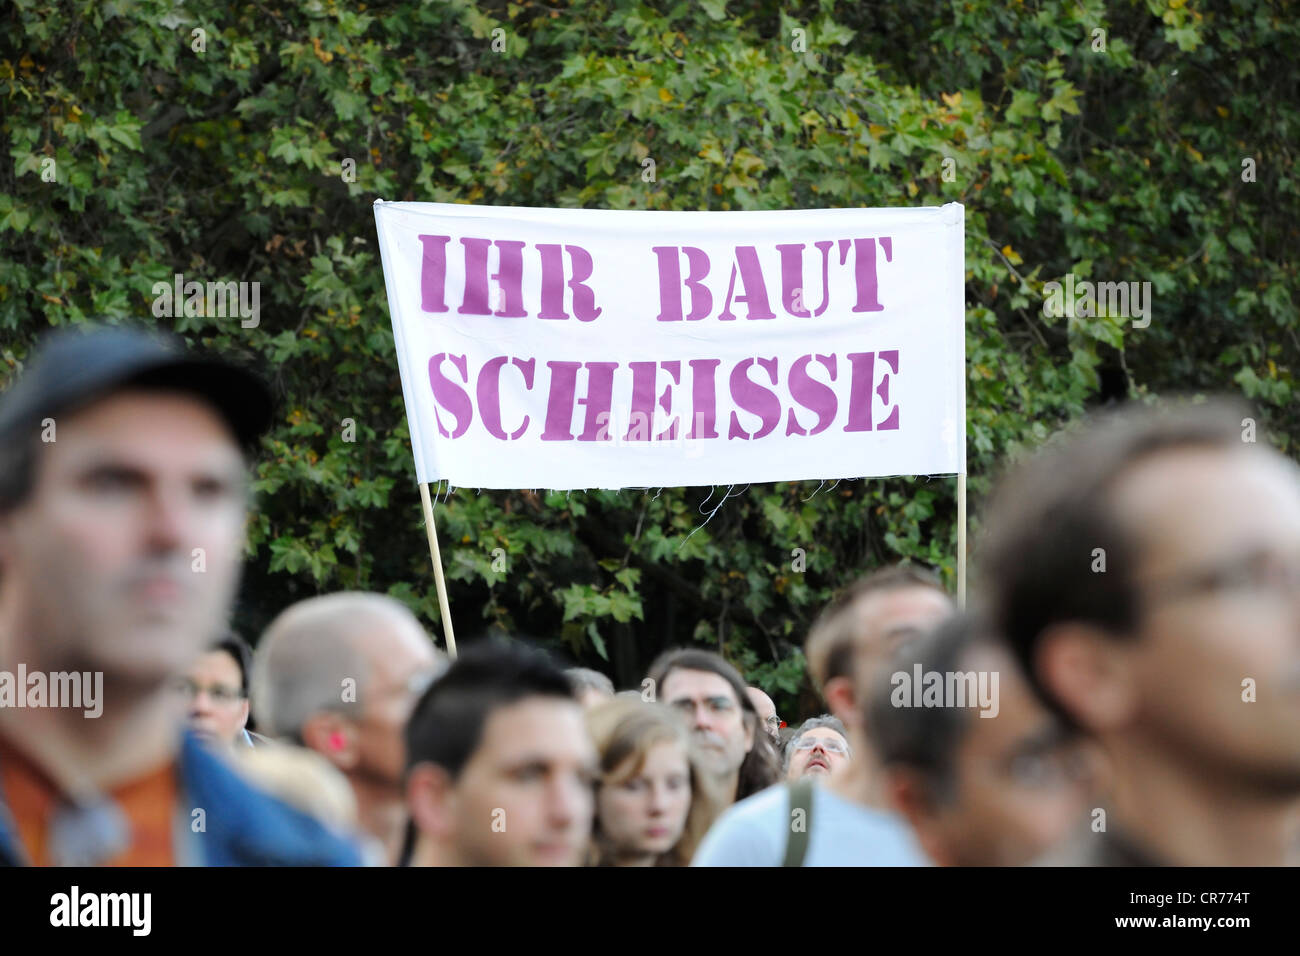 Protesters with banner 'Ihr baut Scheisse', German for 'you build shit' in Stuttgart 21 demonstration, Stuttgart Stock Photo